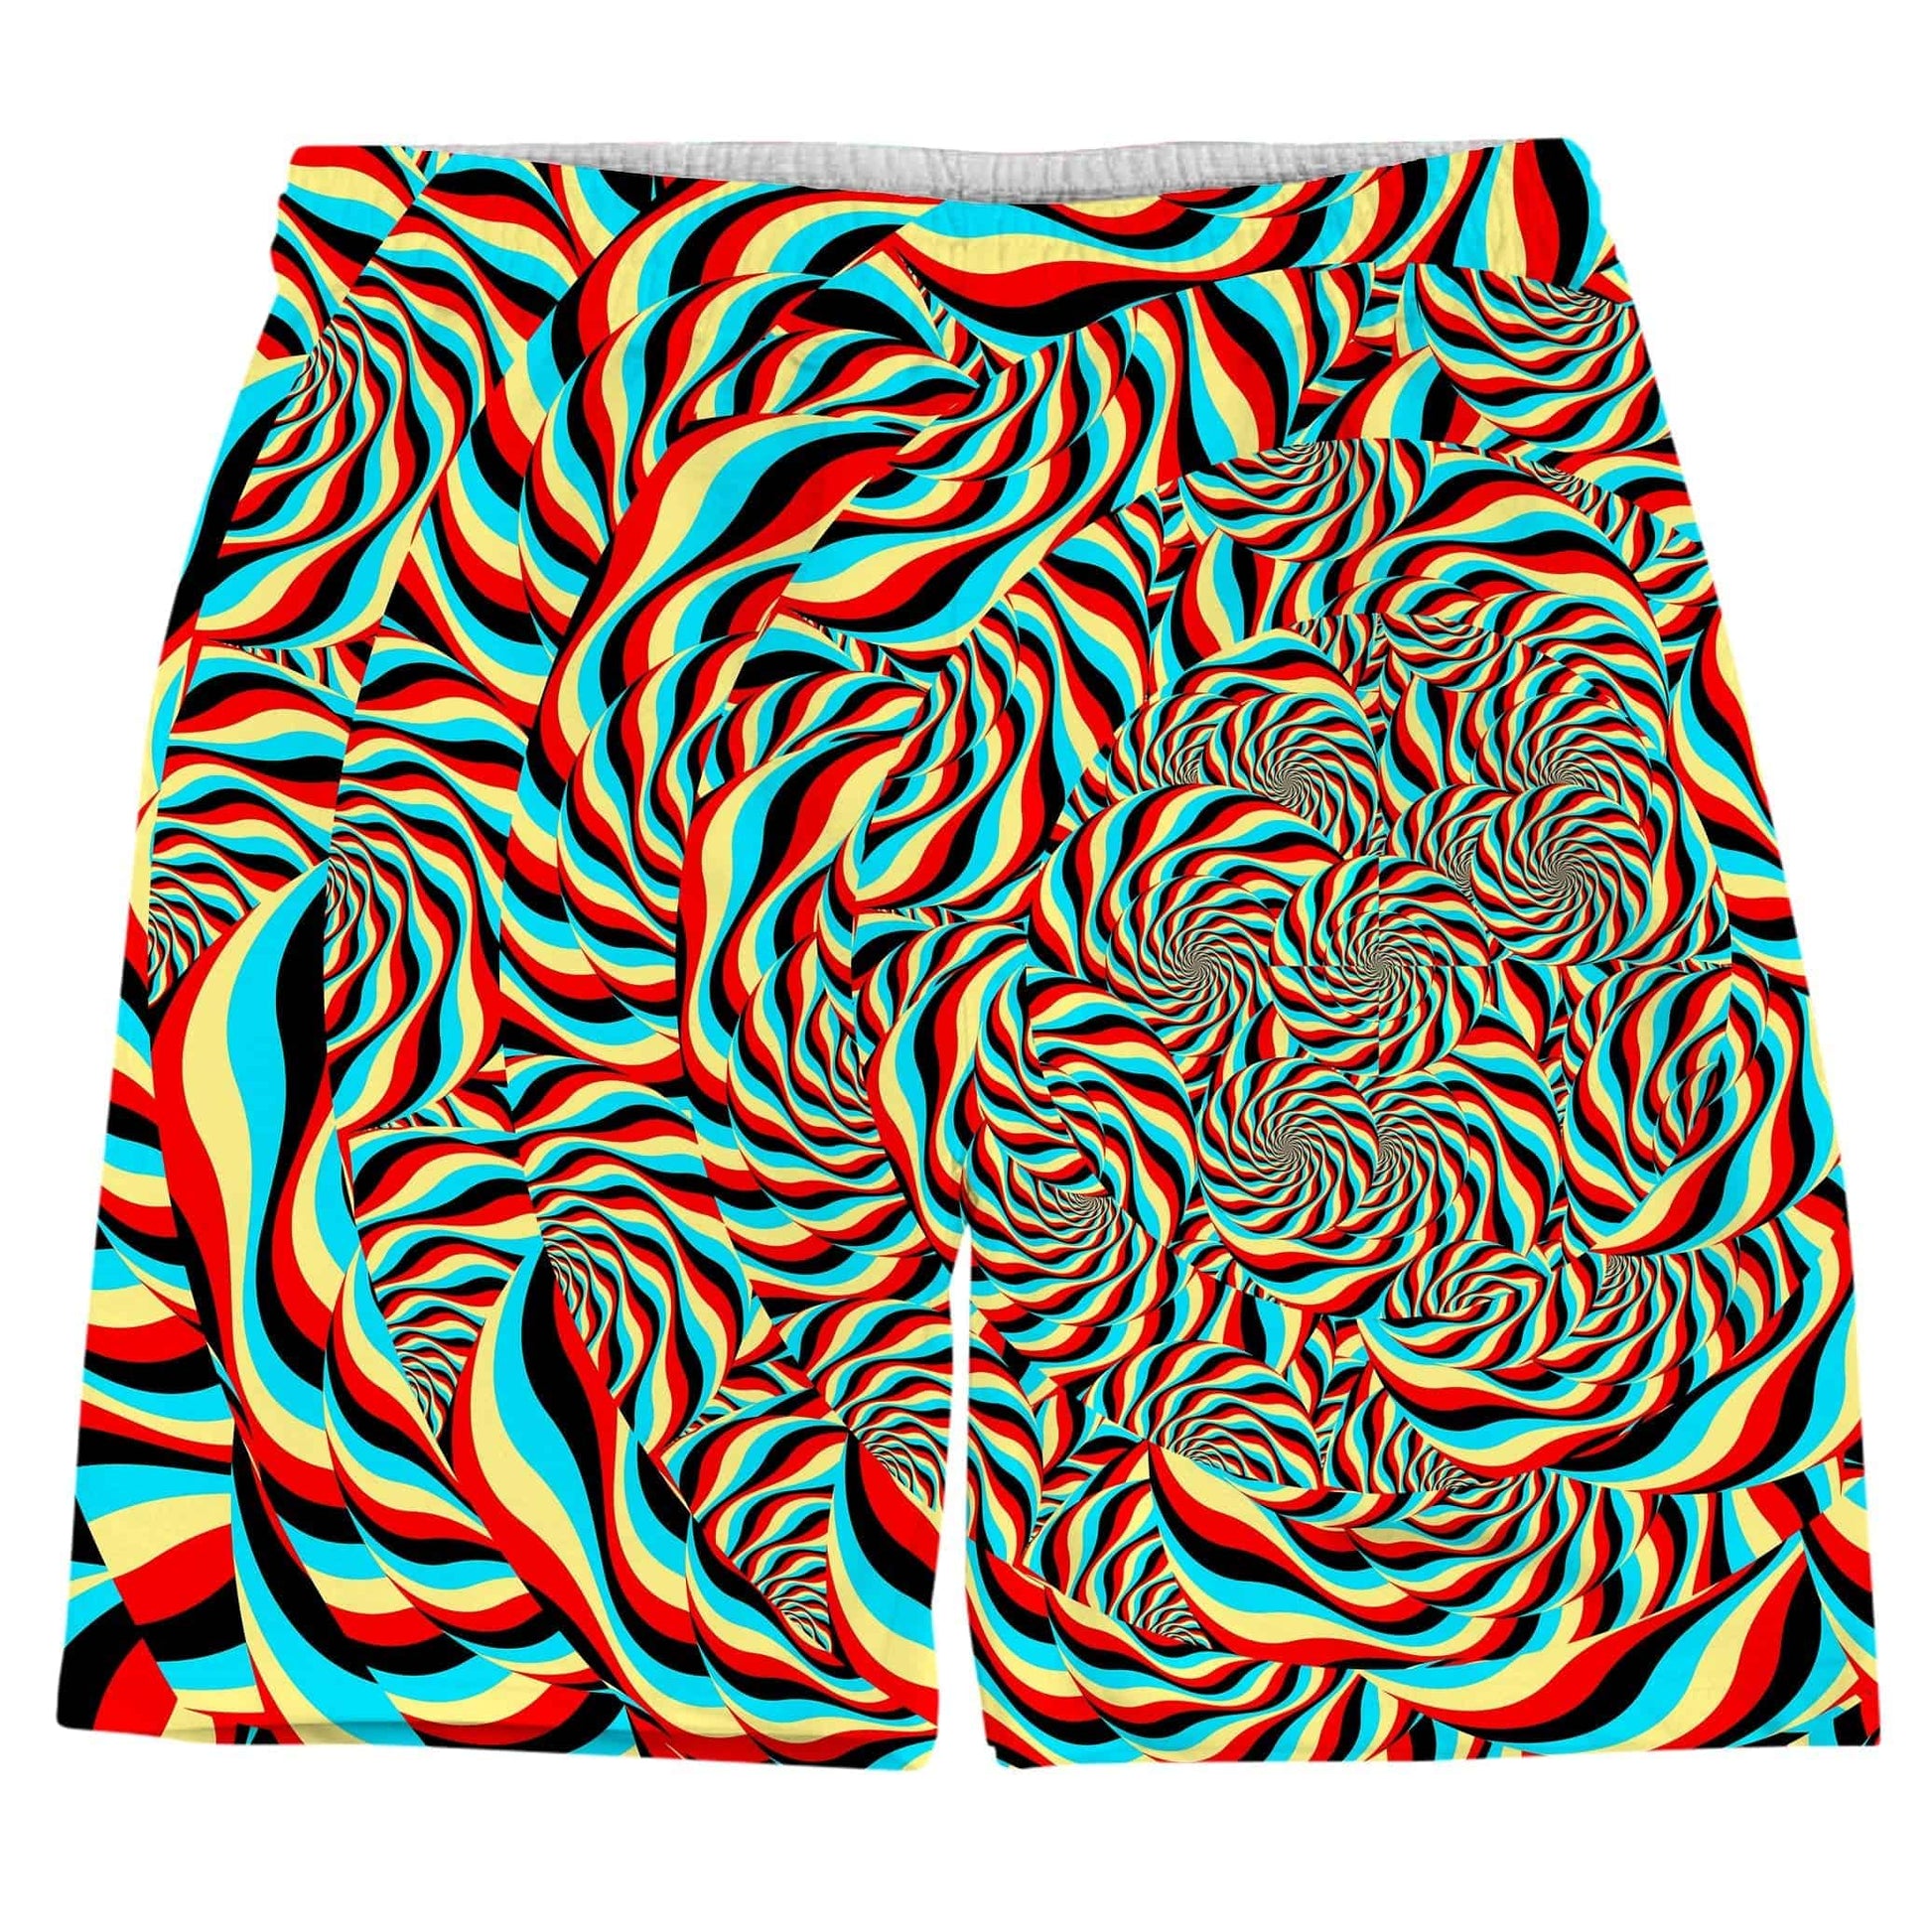 Trippy Swirl T-Shirt and Shorts Combo, Art Design Works, | iEDM